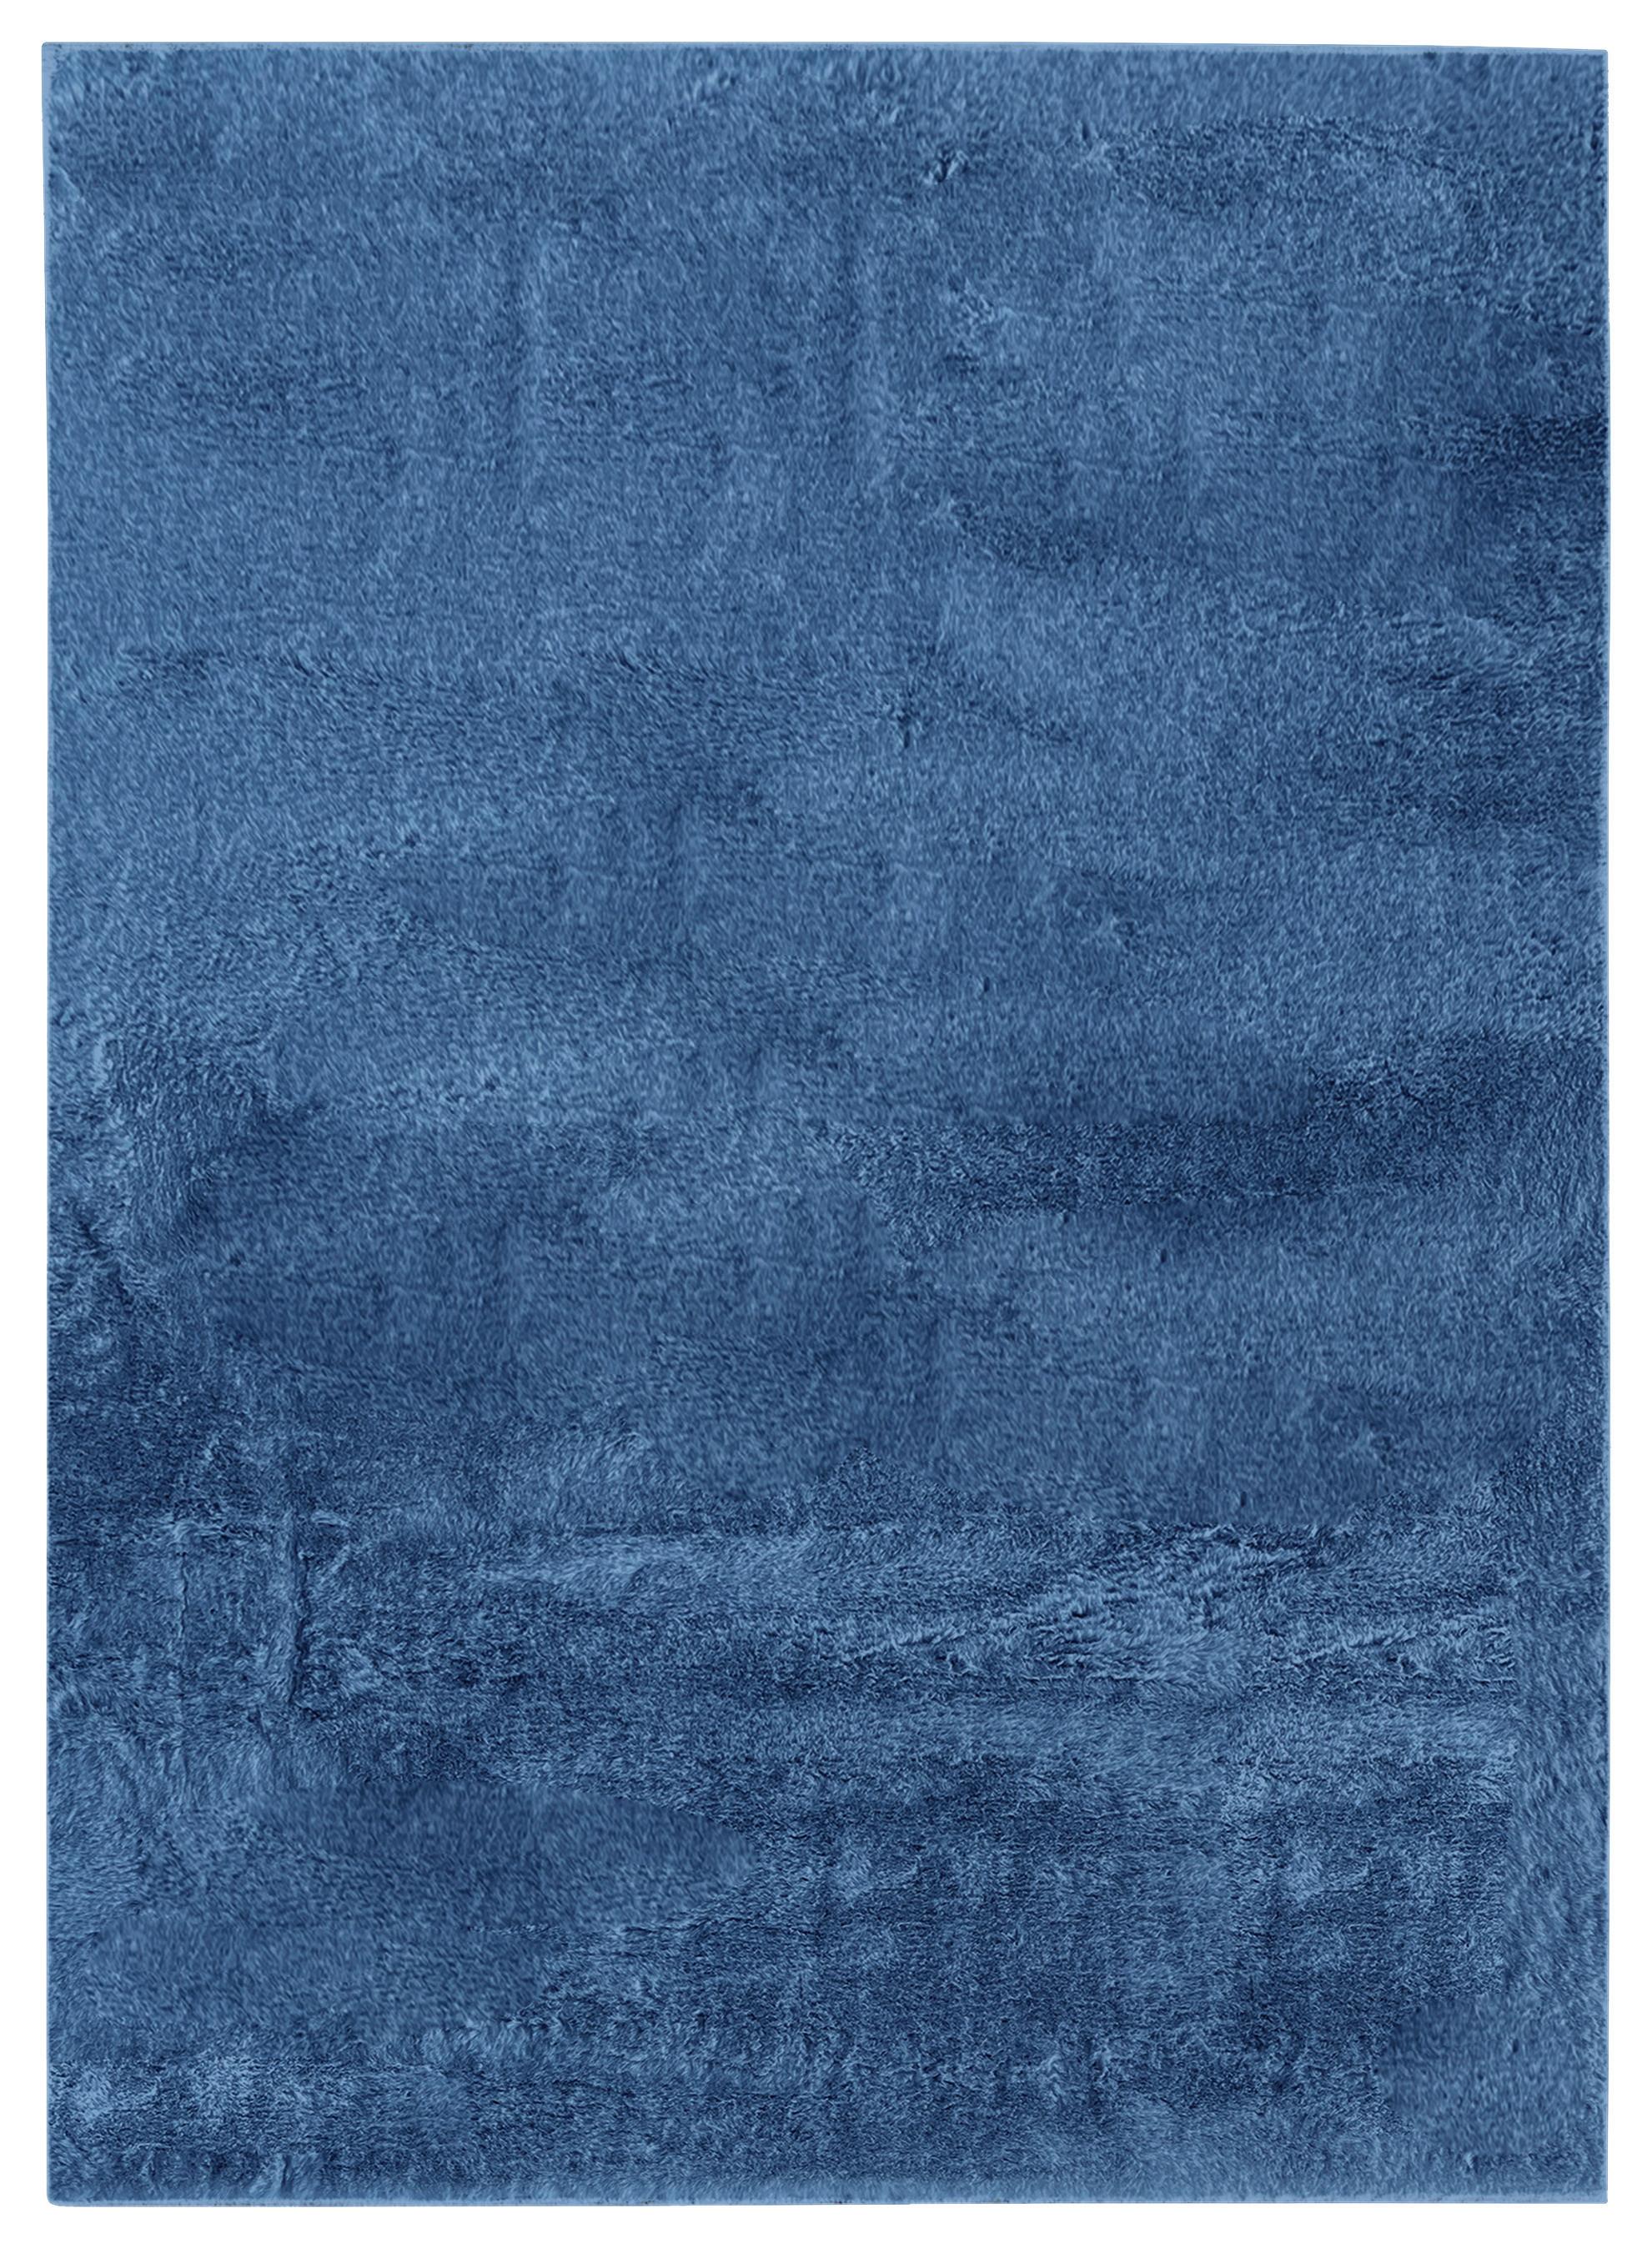 Umelá Kožušina Caroline 3, 160/220cm, Modrá - tmavomodrá, Konvenčný, textil (160/220cm) - Modern Living